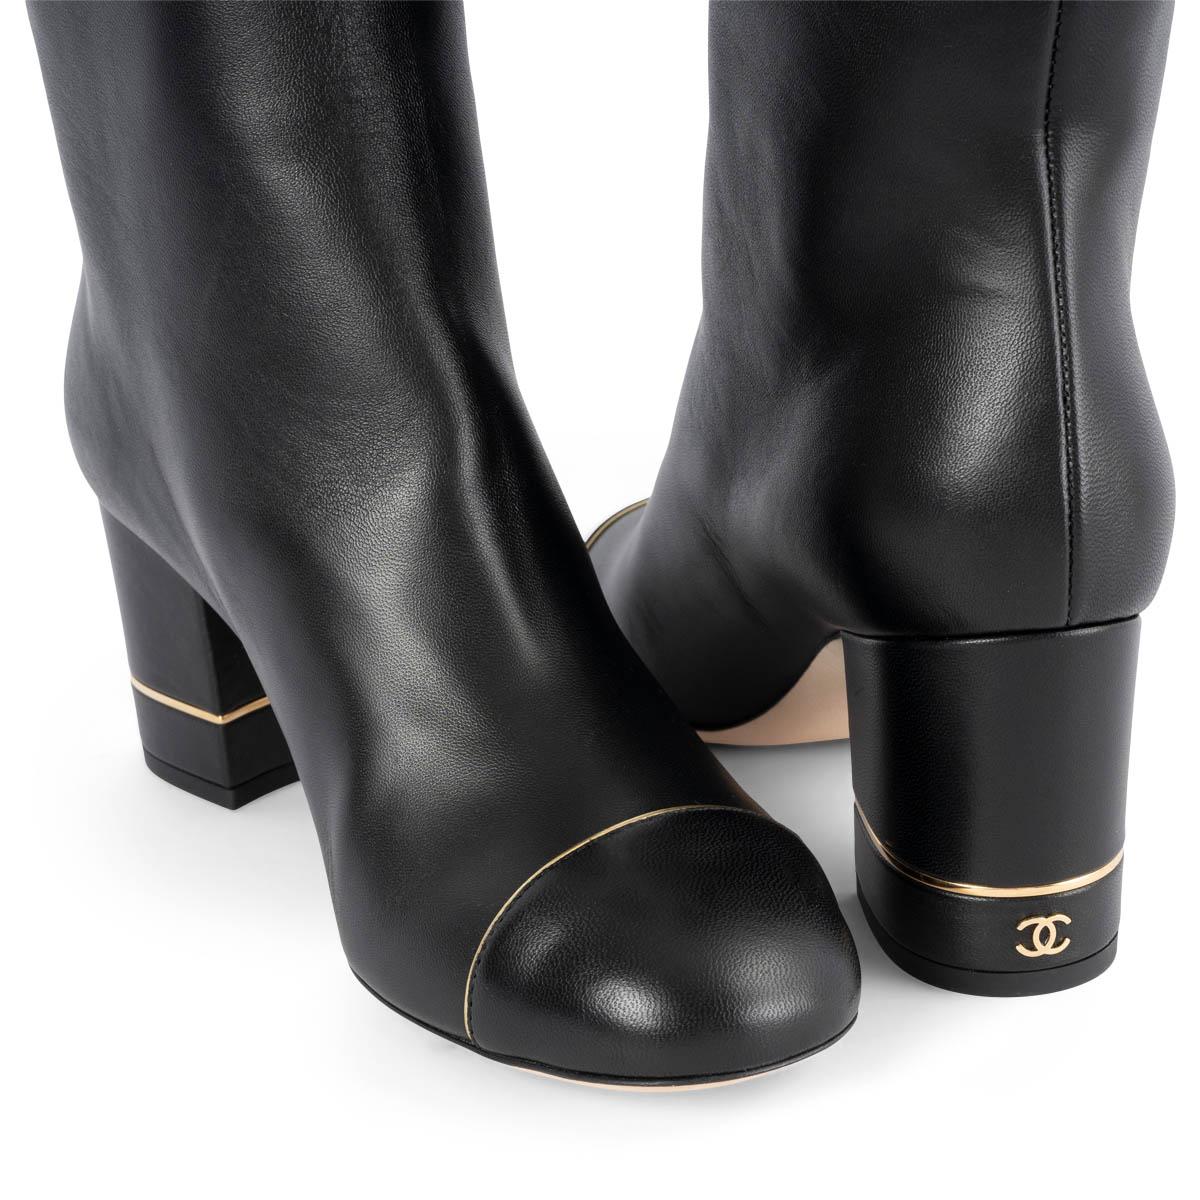 CHANEL black leather METAL TRIM BLOCK HEEL Knee High Boots Shoes 38 1